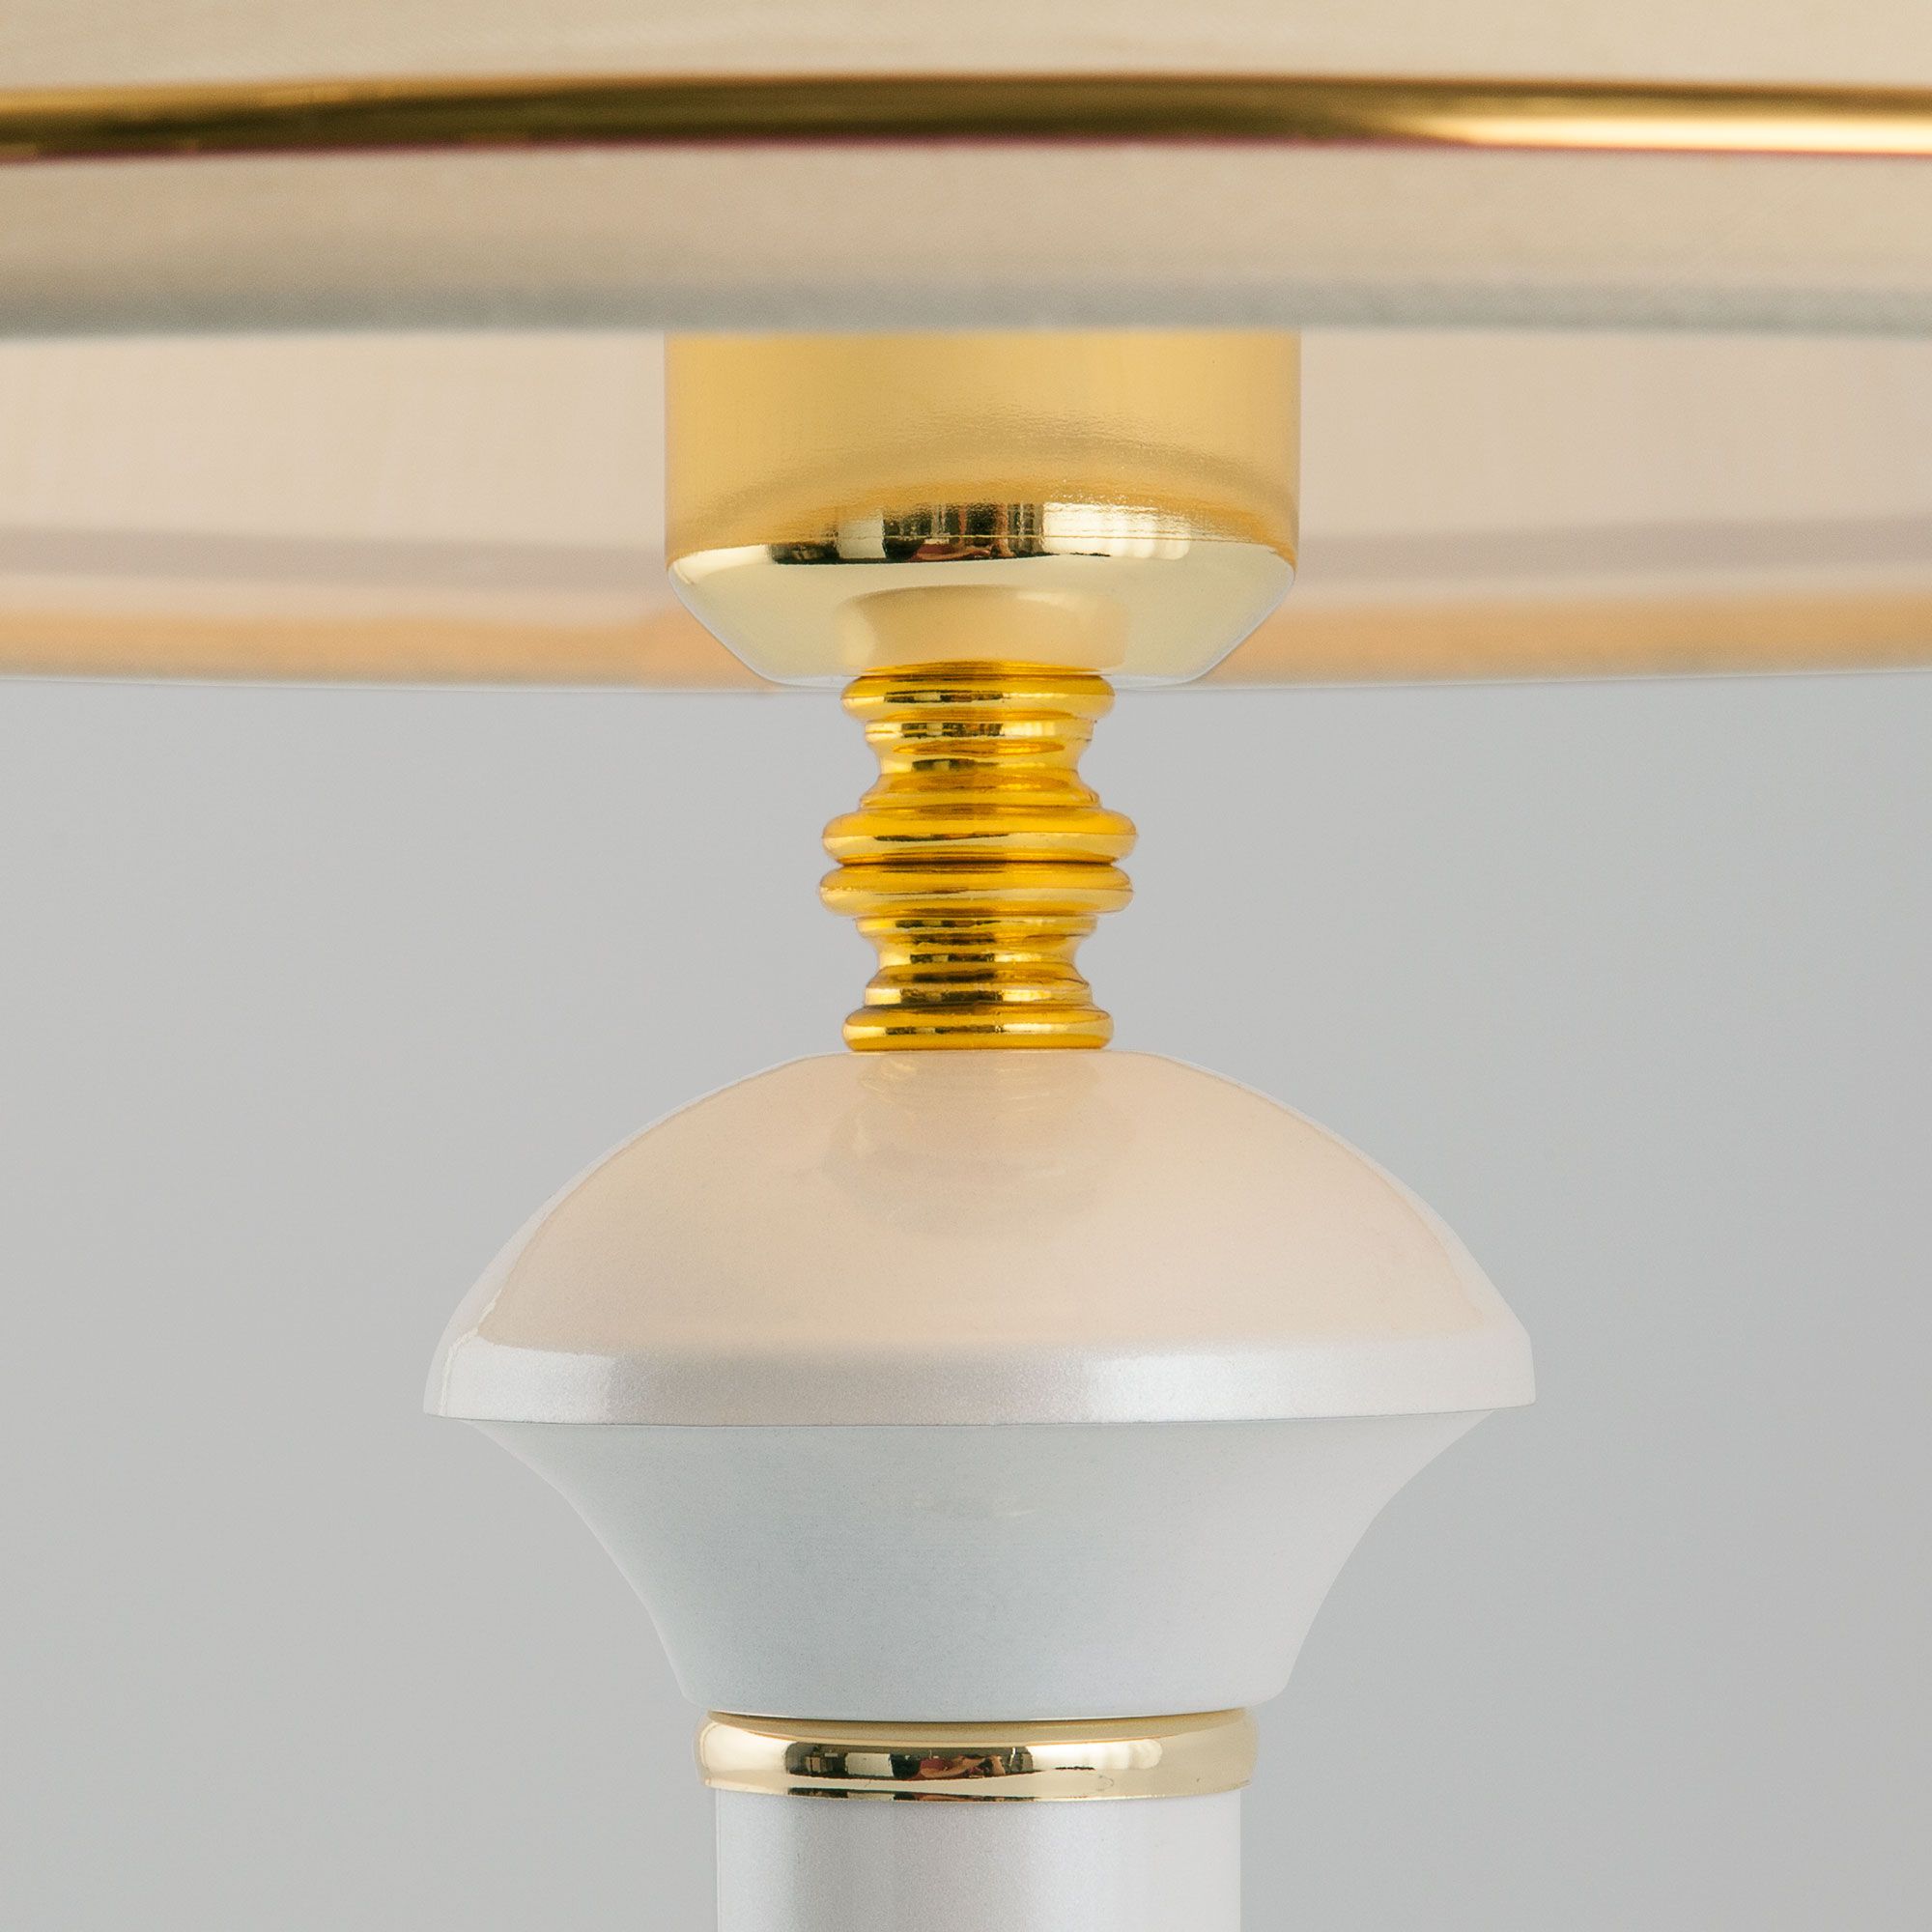 Настольный светильник с тканевым абажуром Eurosvet Lorenzo 60019/1 глянцевый белый. Фото 3